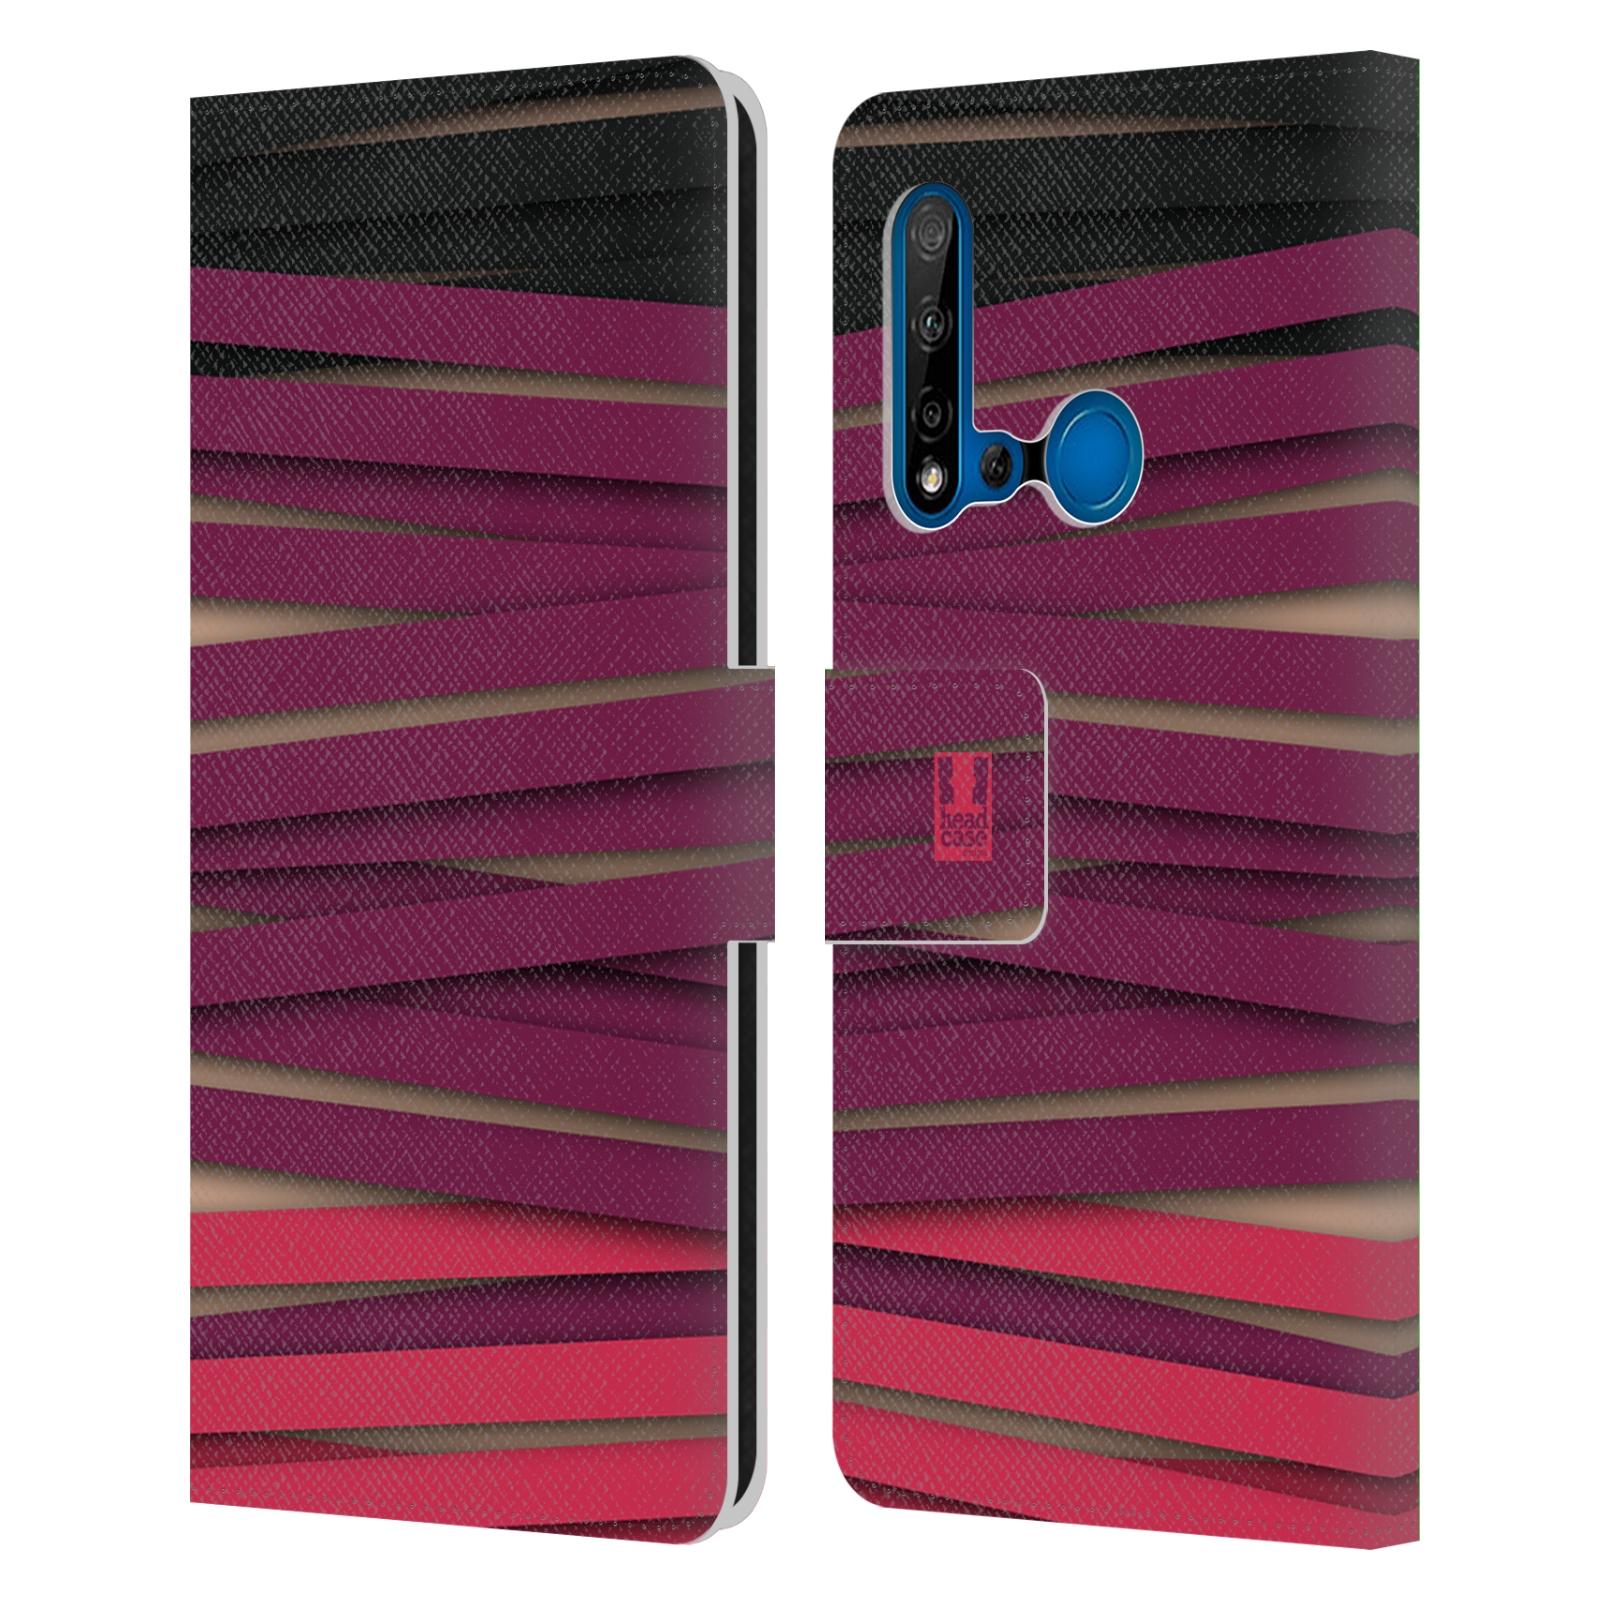 Pouzdro na mobil Huawei P20 LITE 2019 barevná mumie proužky fialová a černá